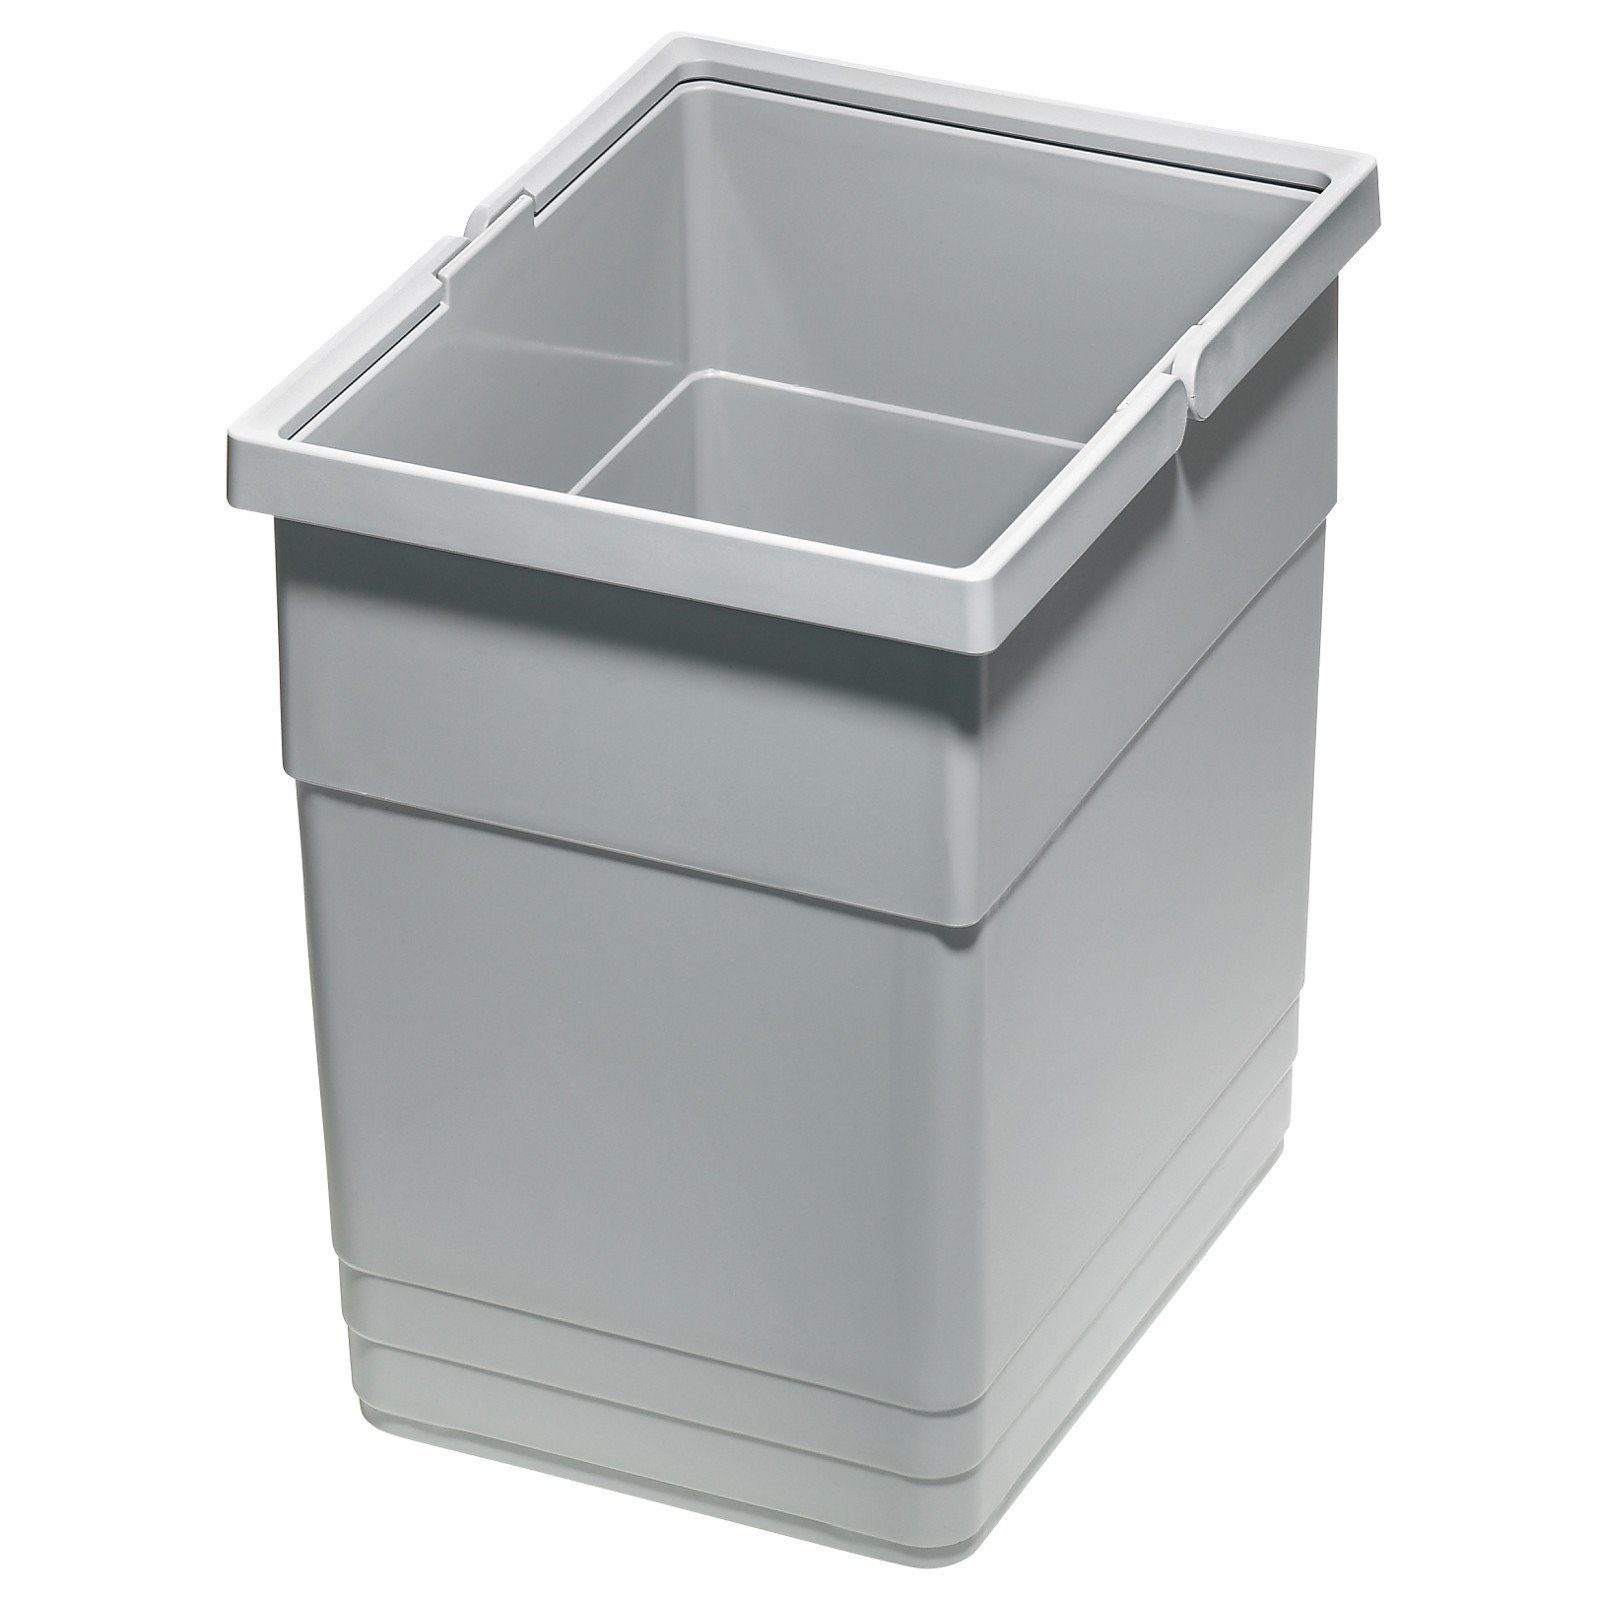 SO-TECH® Mülltrennsystem Abfallsammler Abfalleimer 5136.11 Abfalltrennsystem eins2vier für